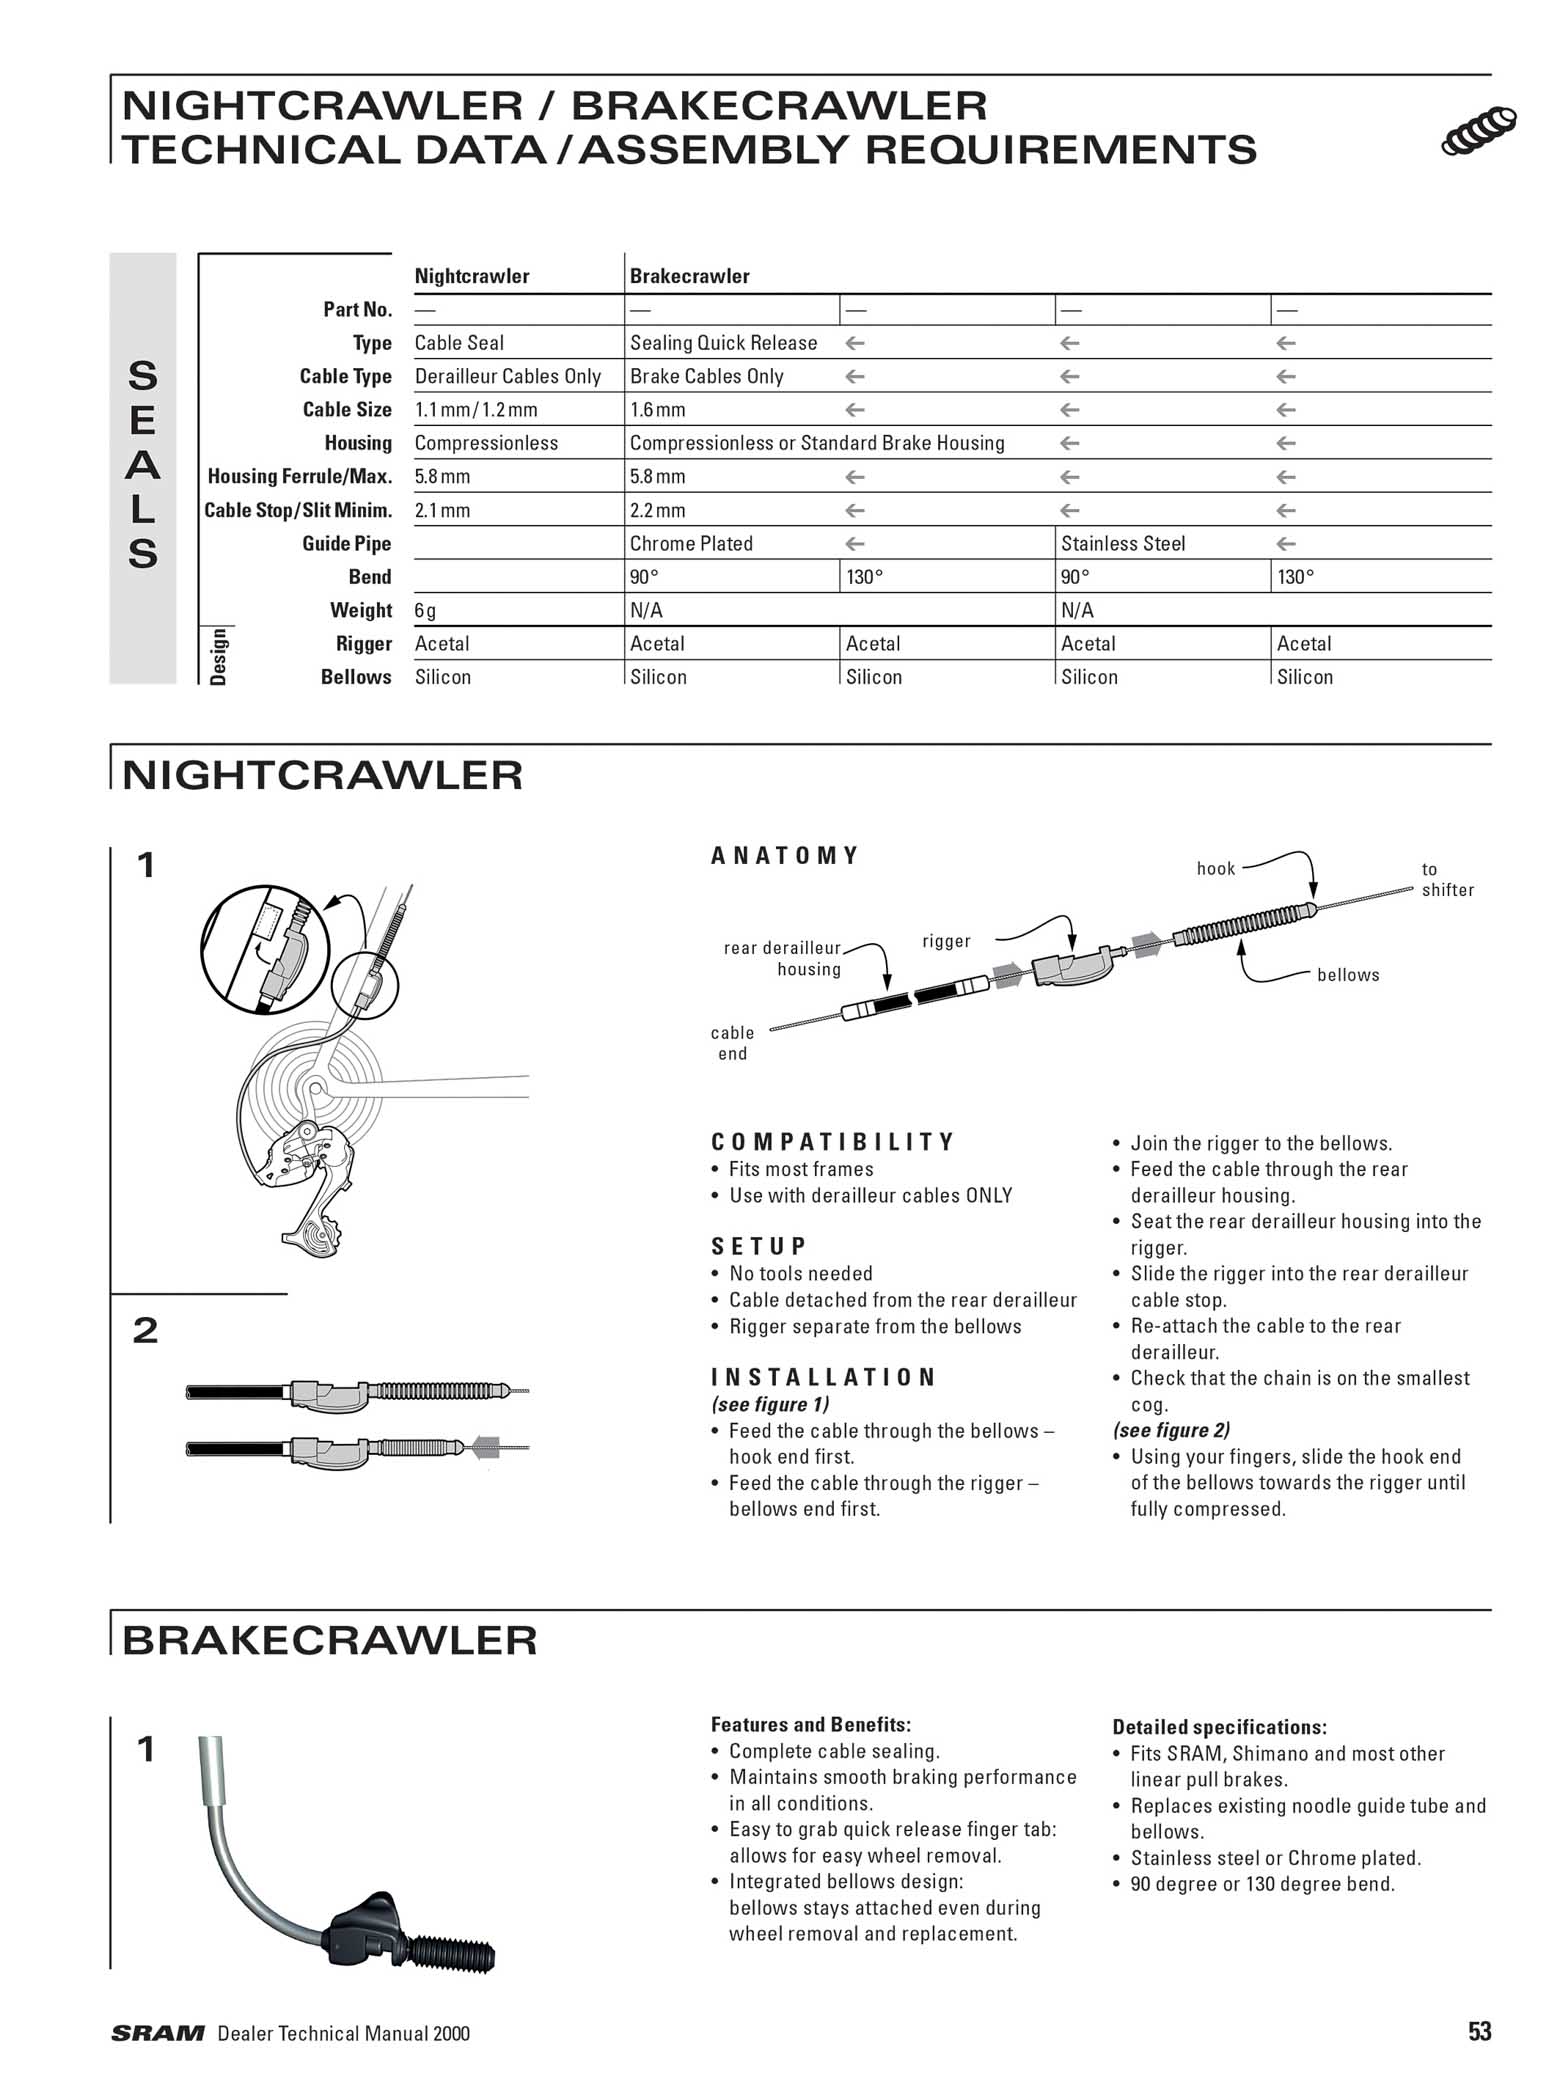 SRAM Dealer Tech. Manual 2000 page 053 main image